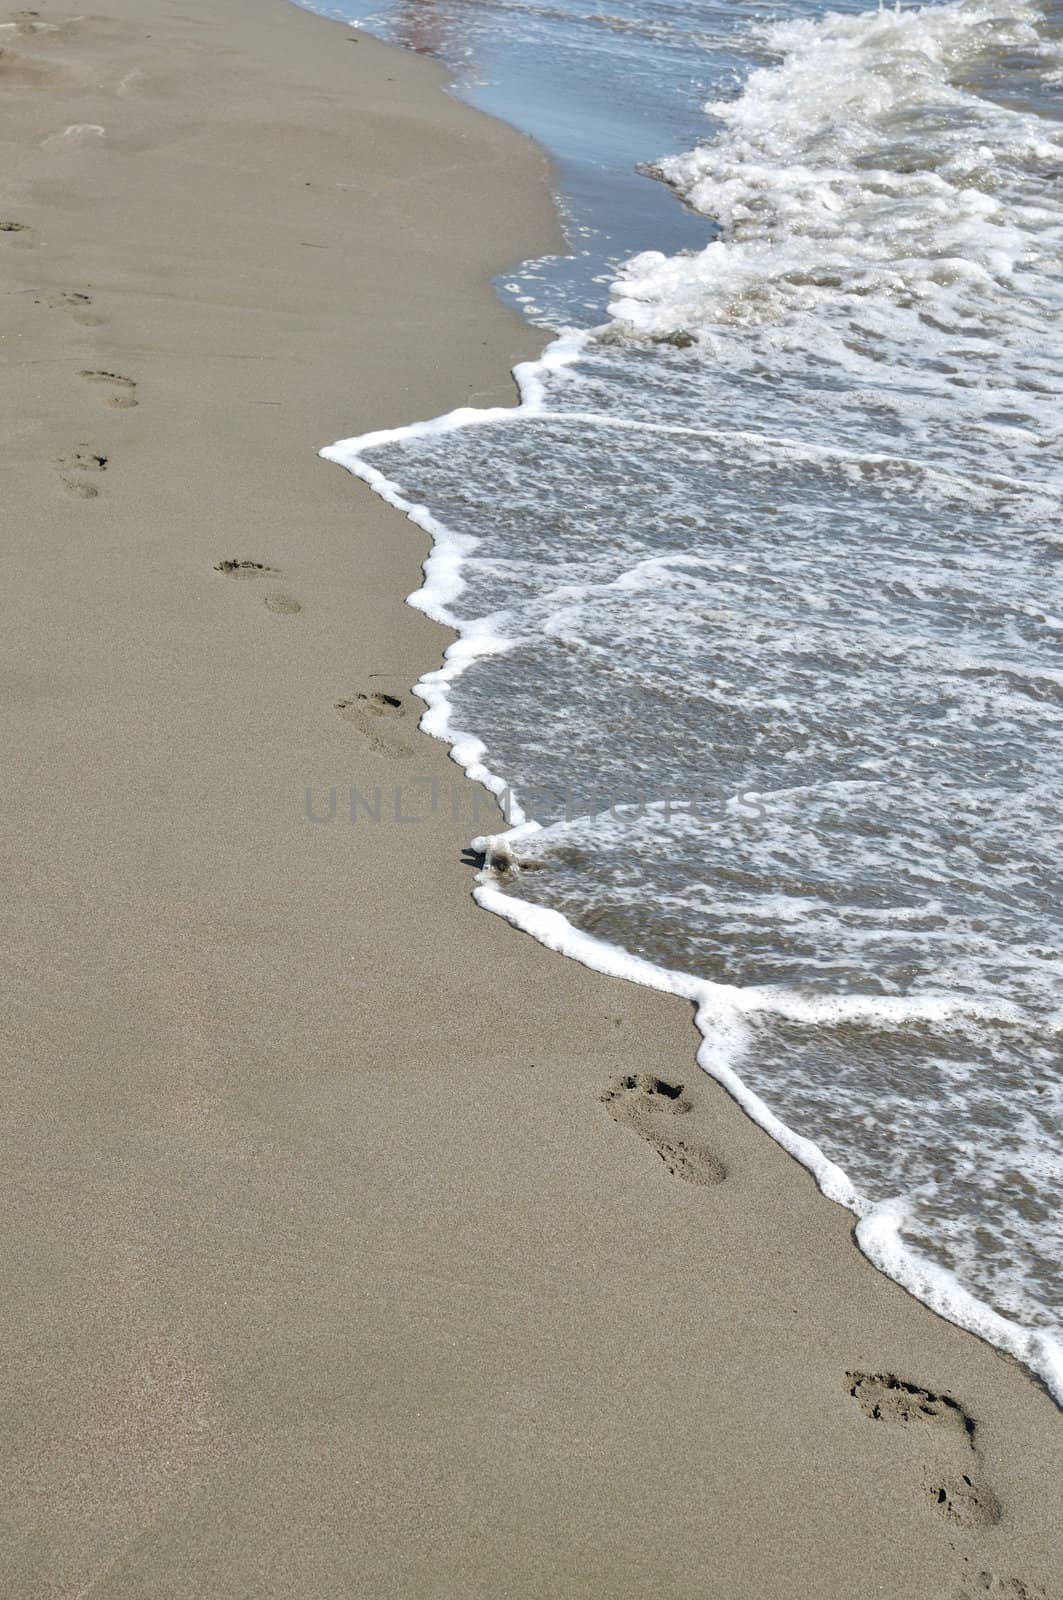 Footprint on the sandy beach and sea wave